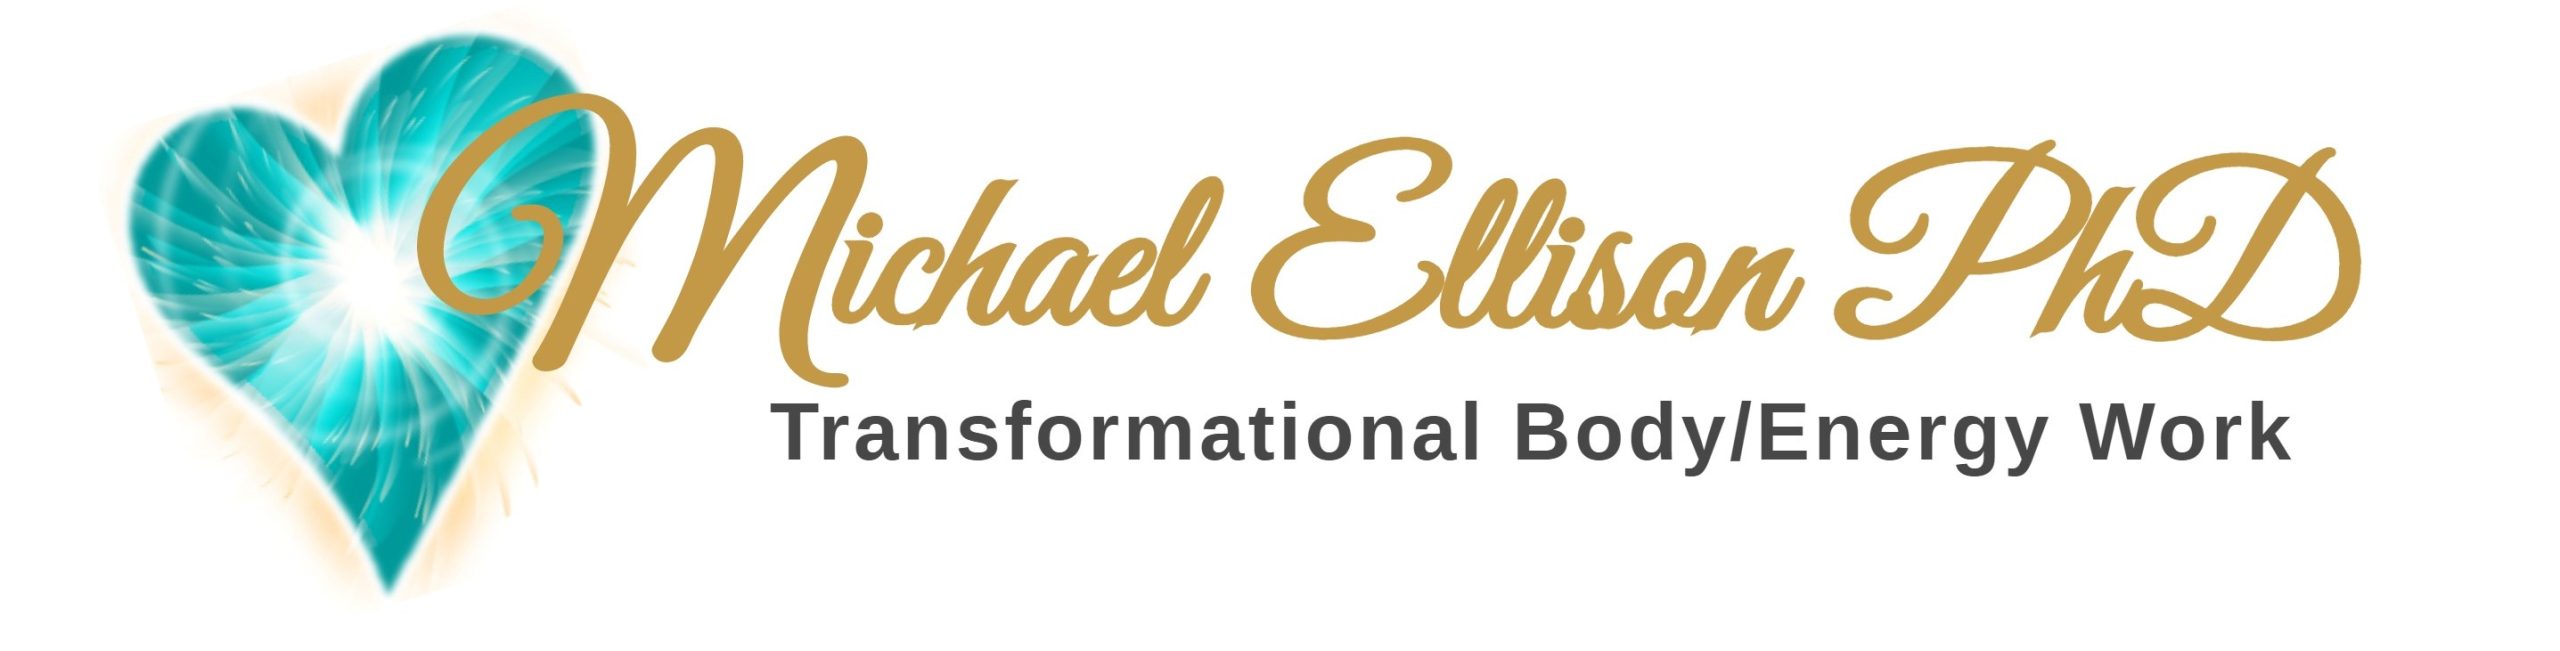 Michael Ellison PhD transformational body work / author